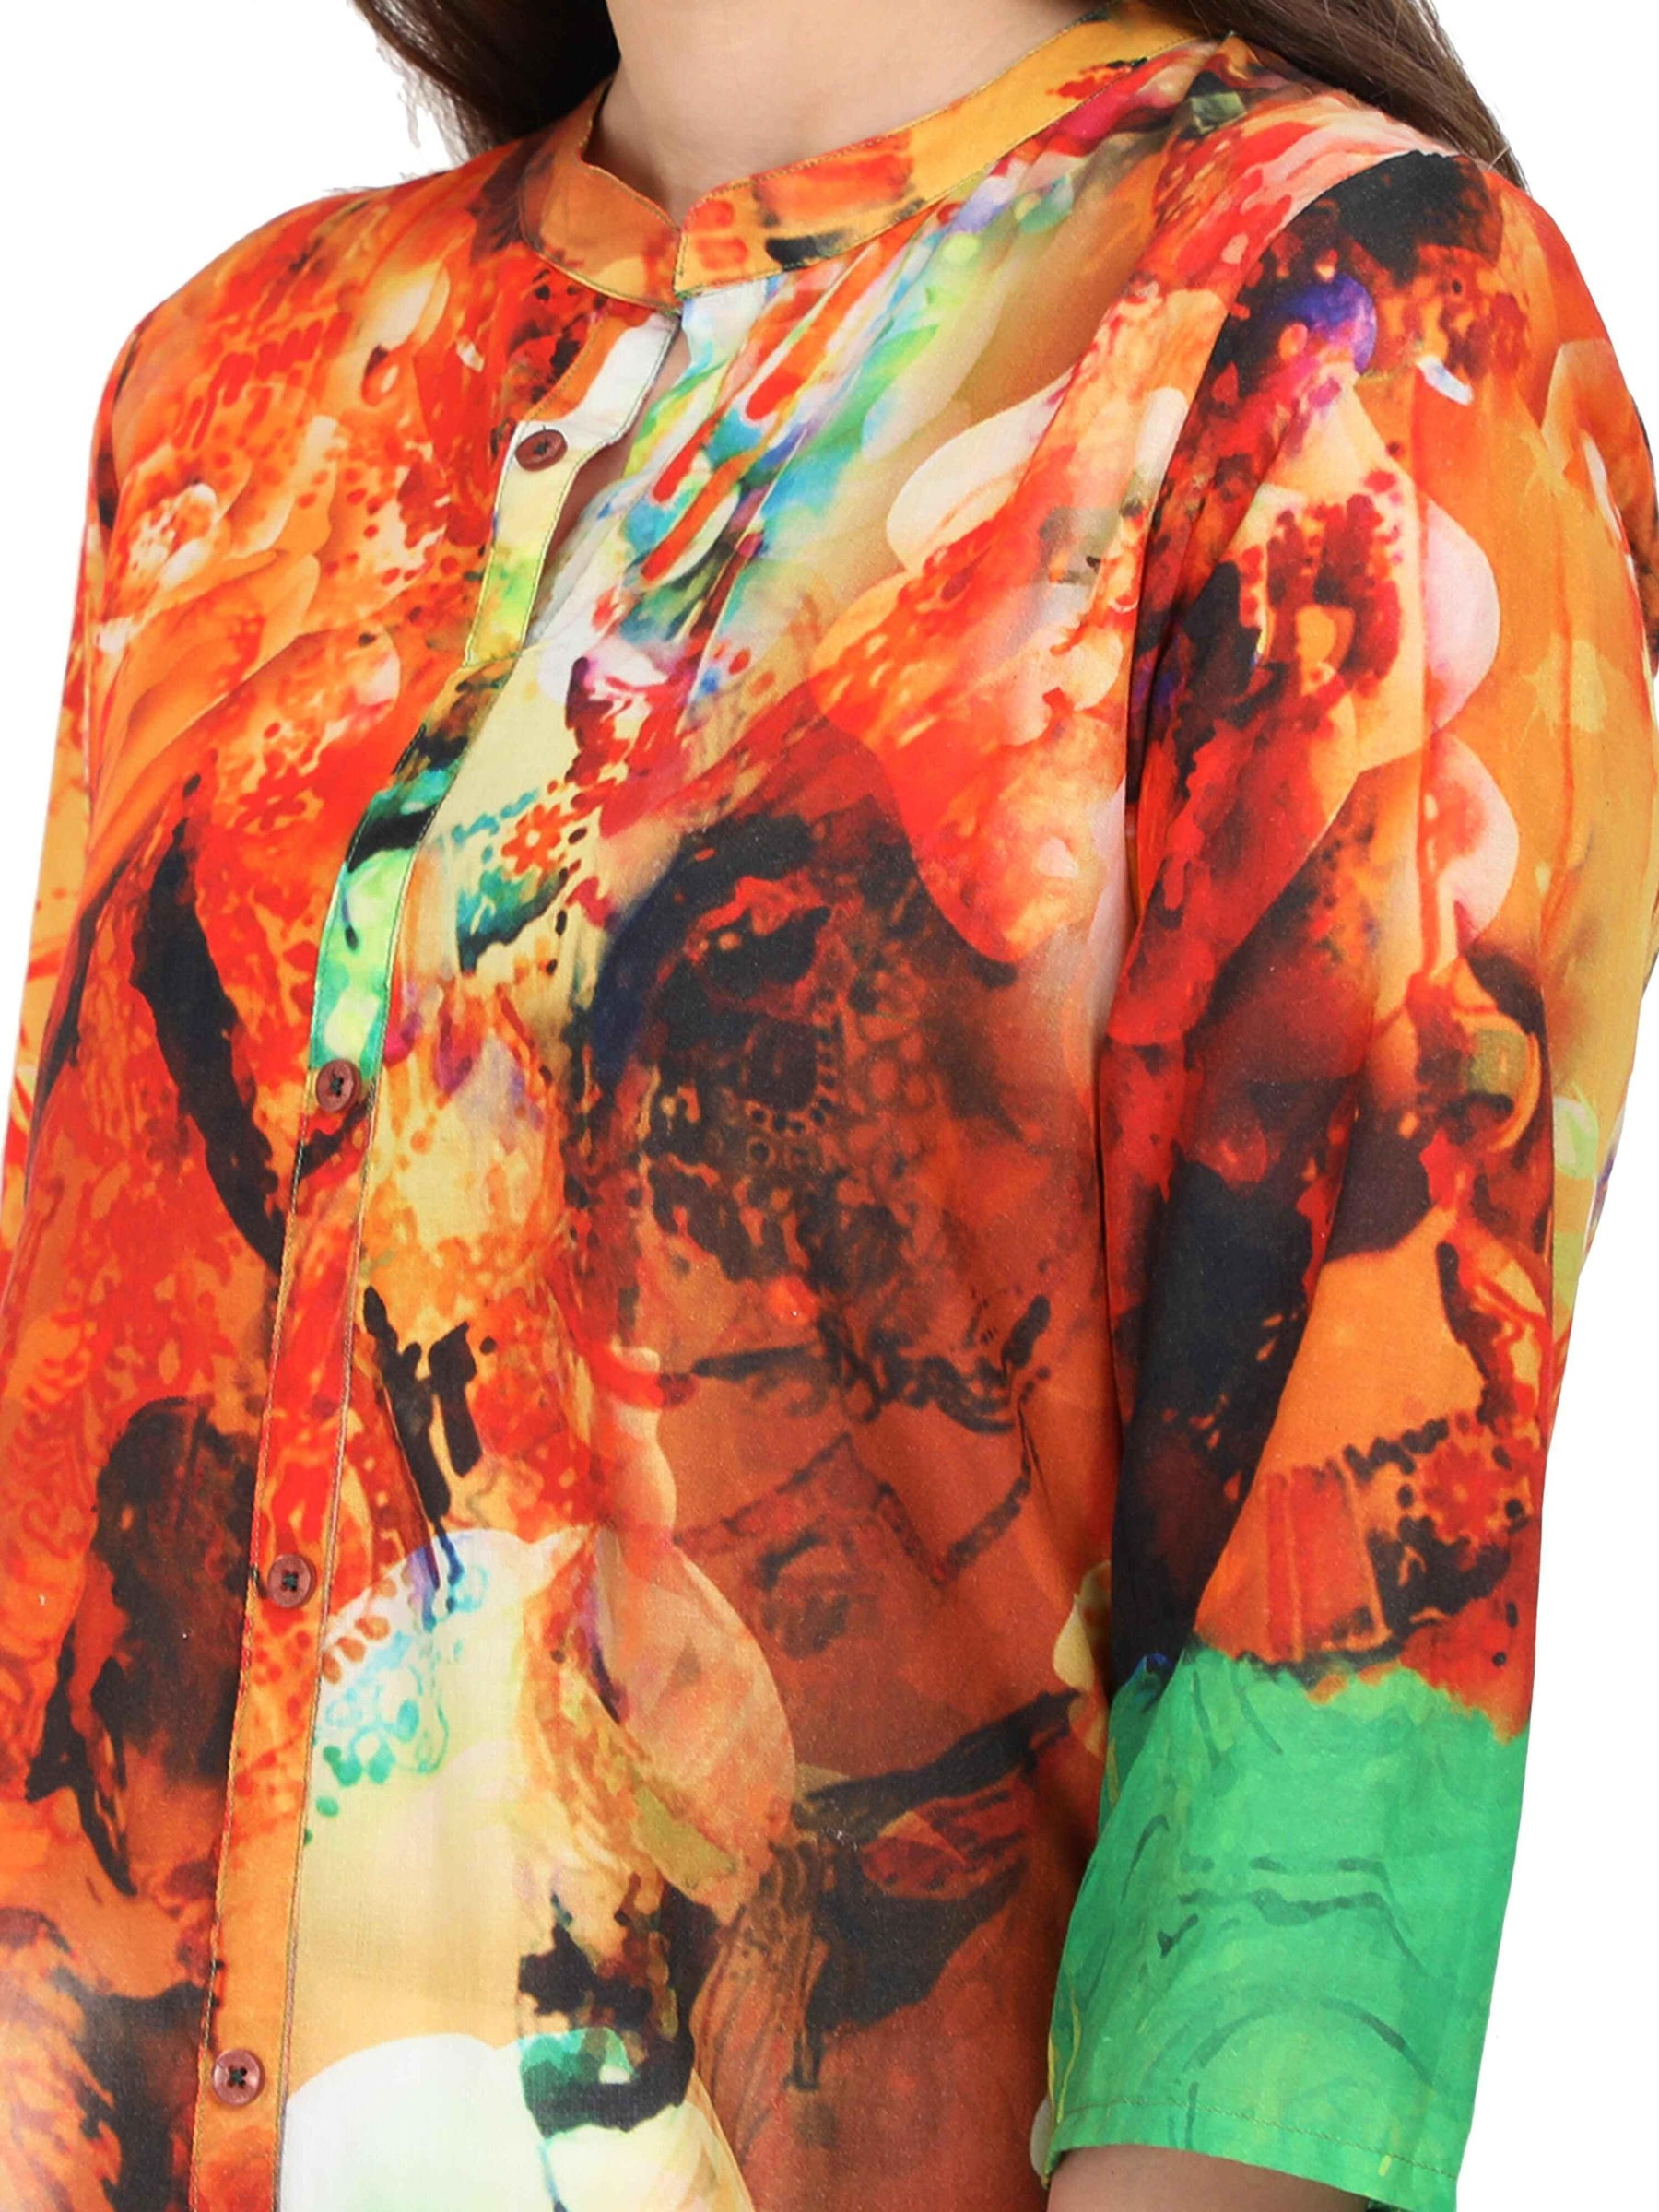 Digital Printed Multi-Colour Style Kurti - Guniaa Fashions